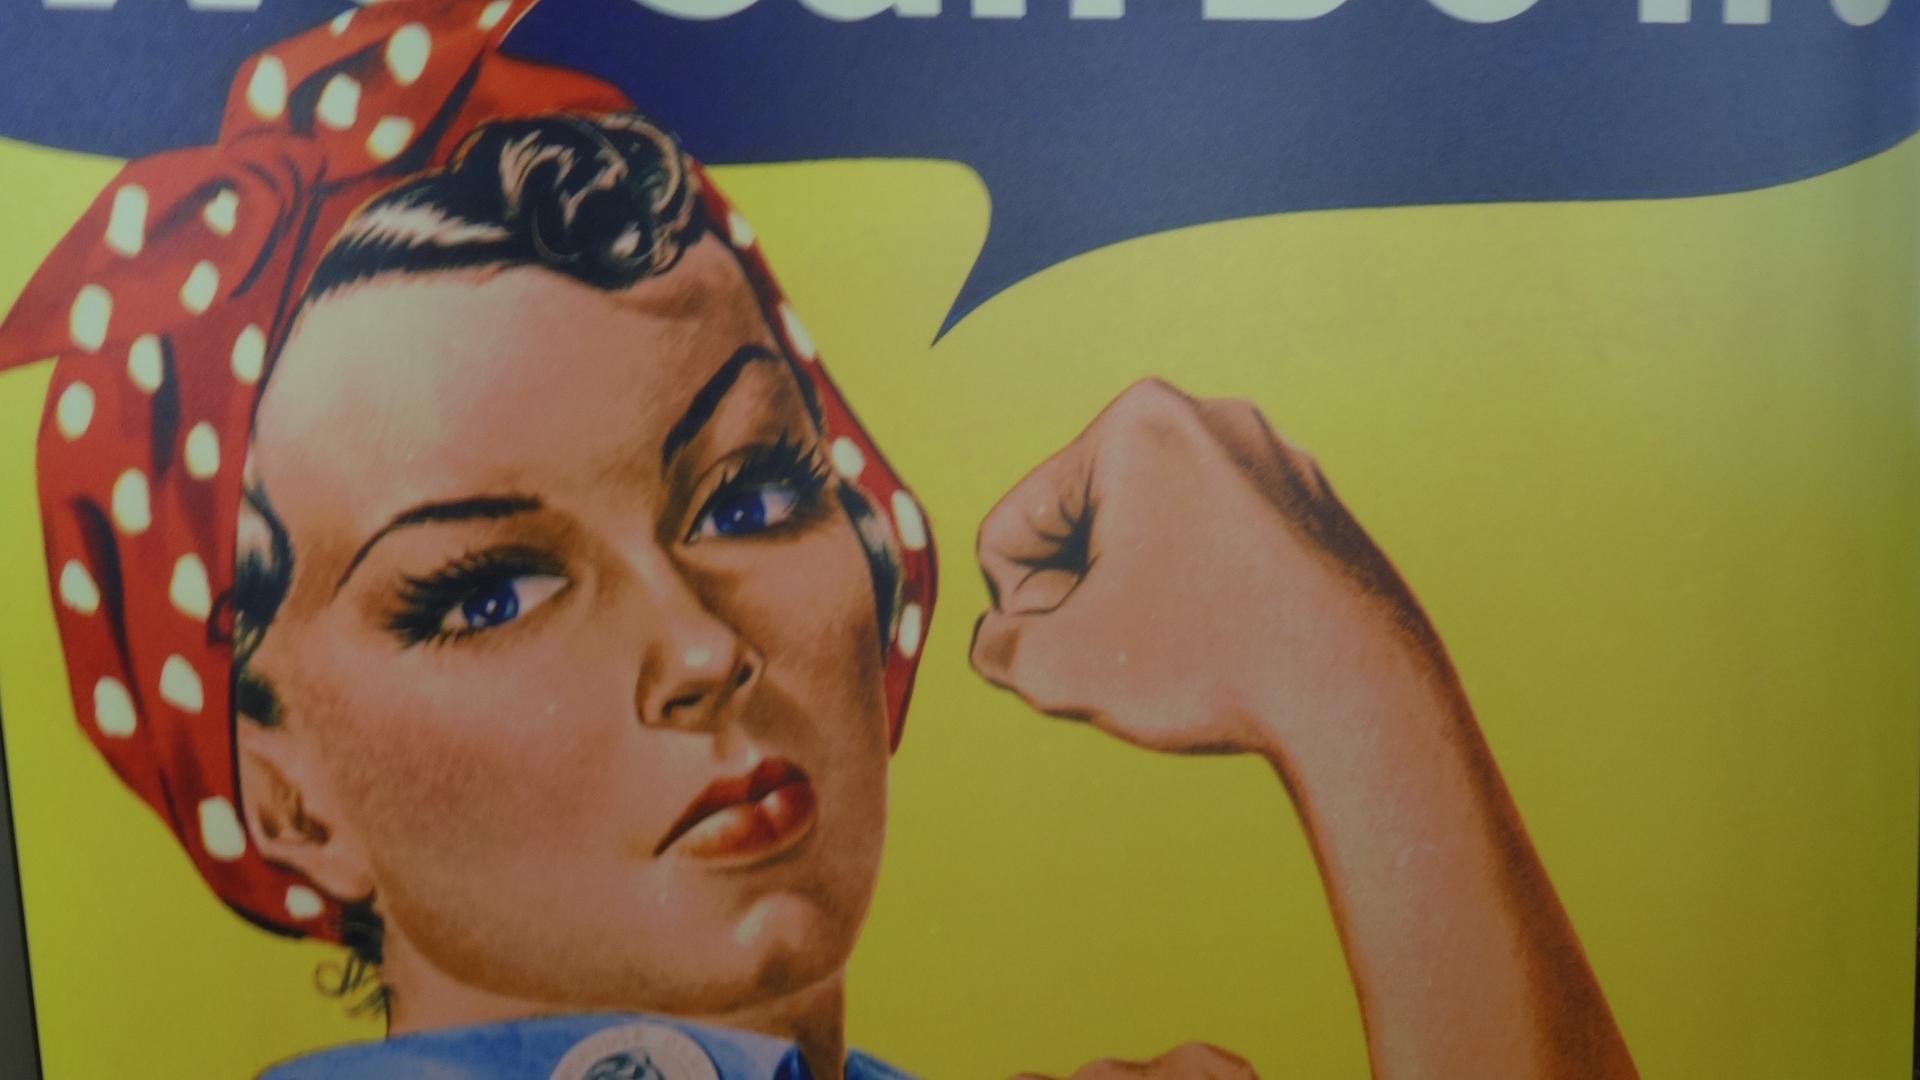 Rosie the Riveter poster, from World War II era